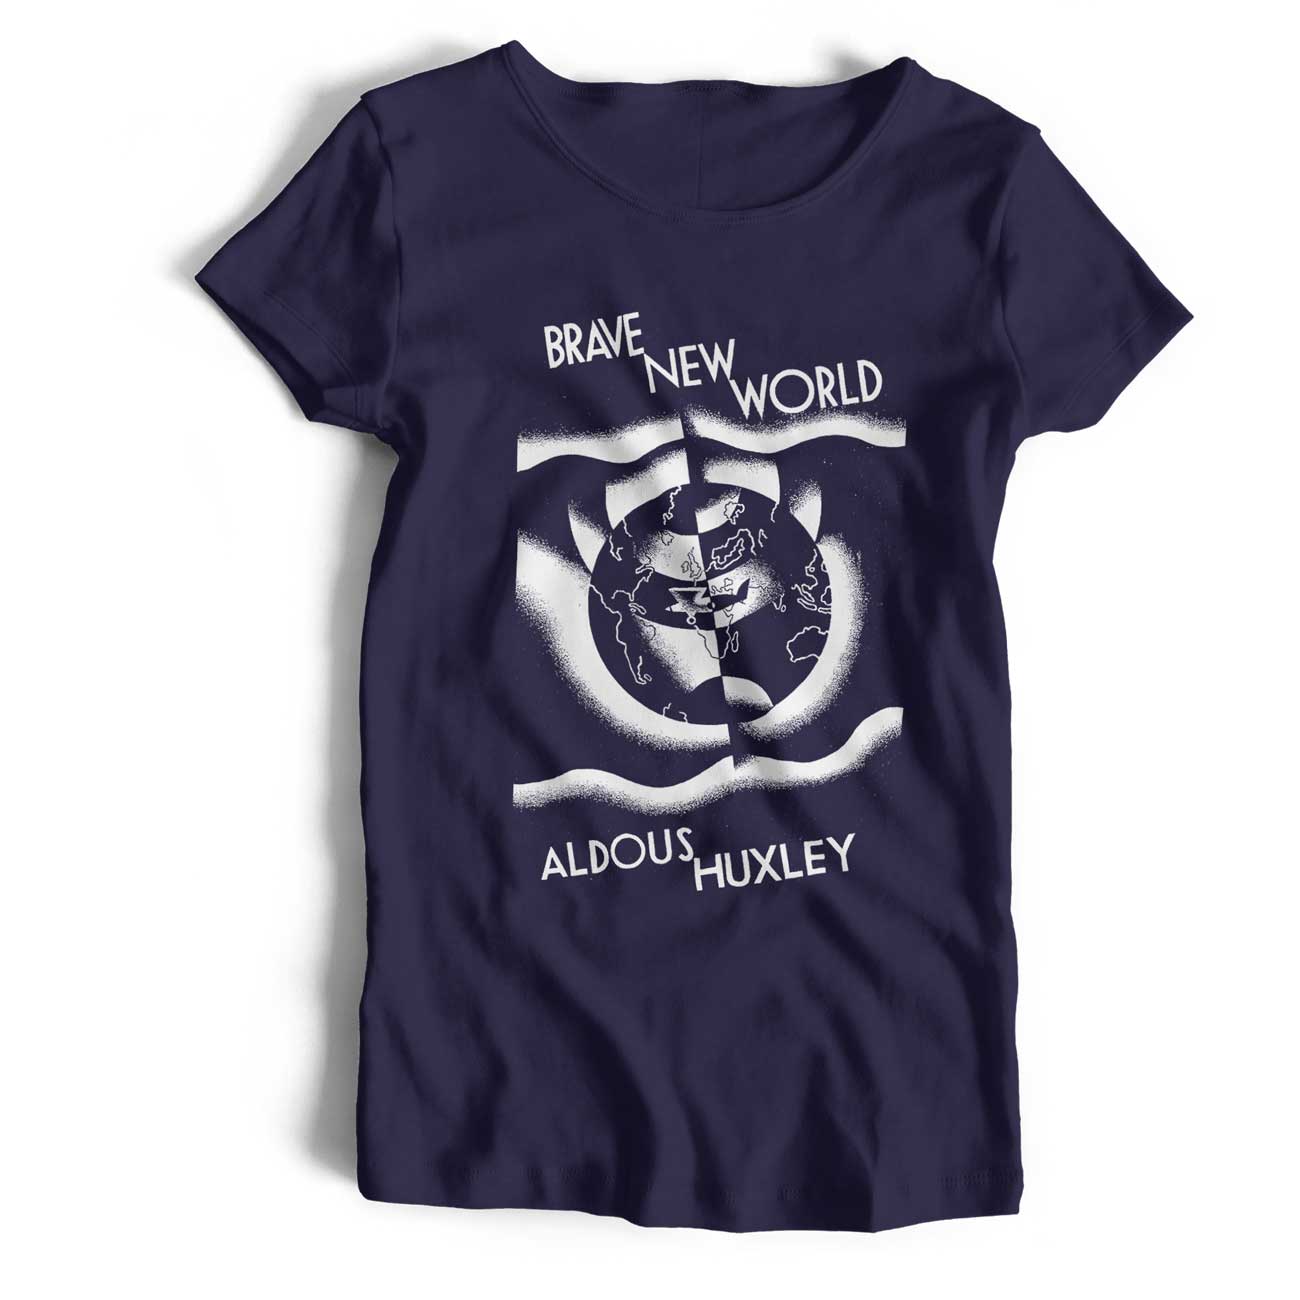 Aldous Huxley T Shirt - Brave New World 1st Edition Cover Classic Literature